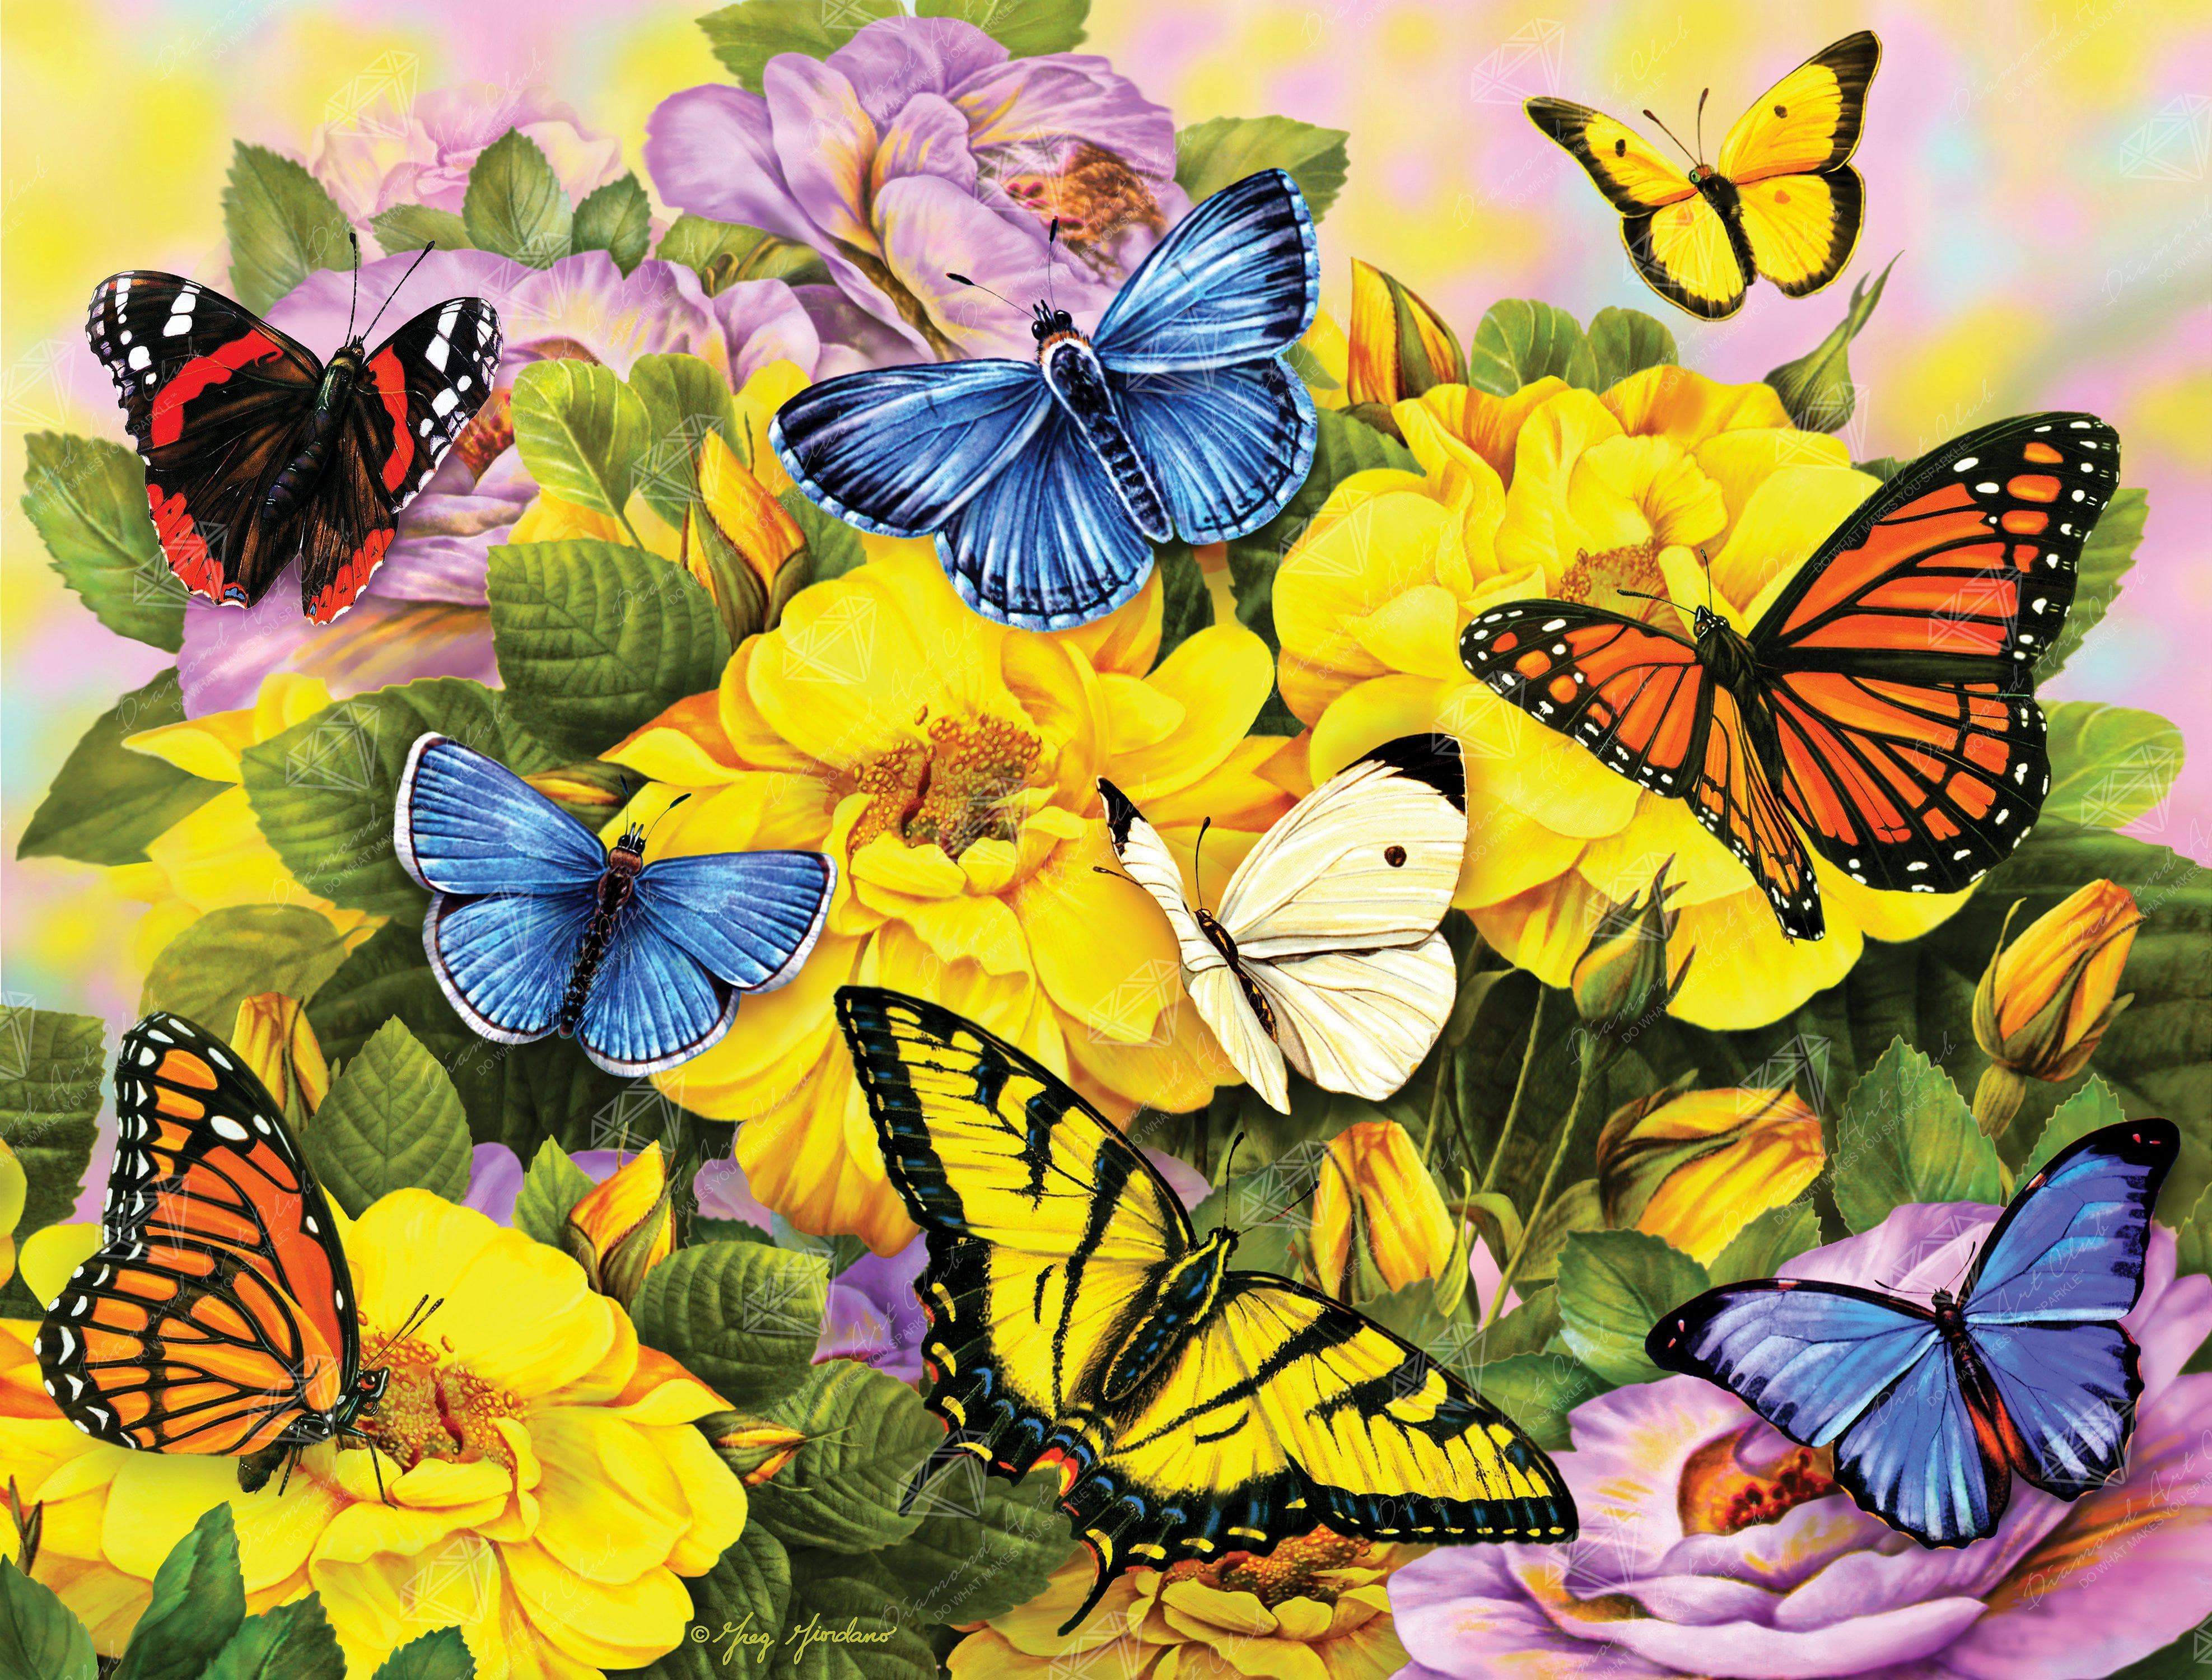 Colorful Butterflies DIY Diamond Painting Stickers – All Diamond Painting